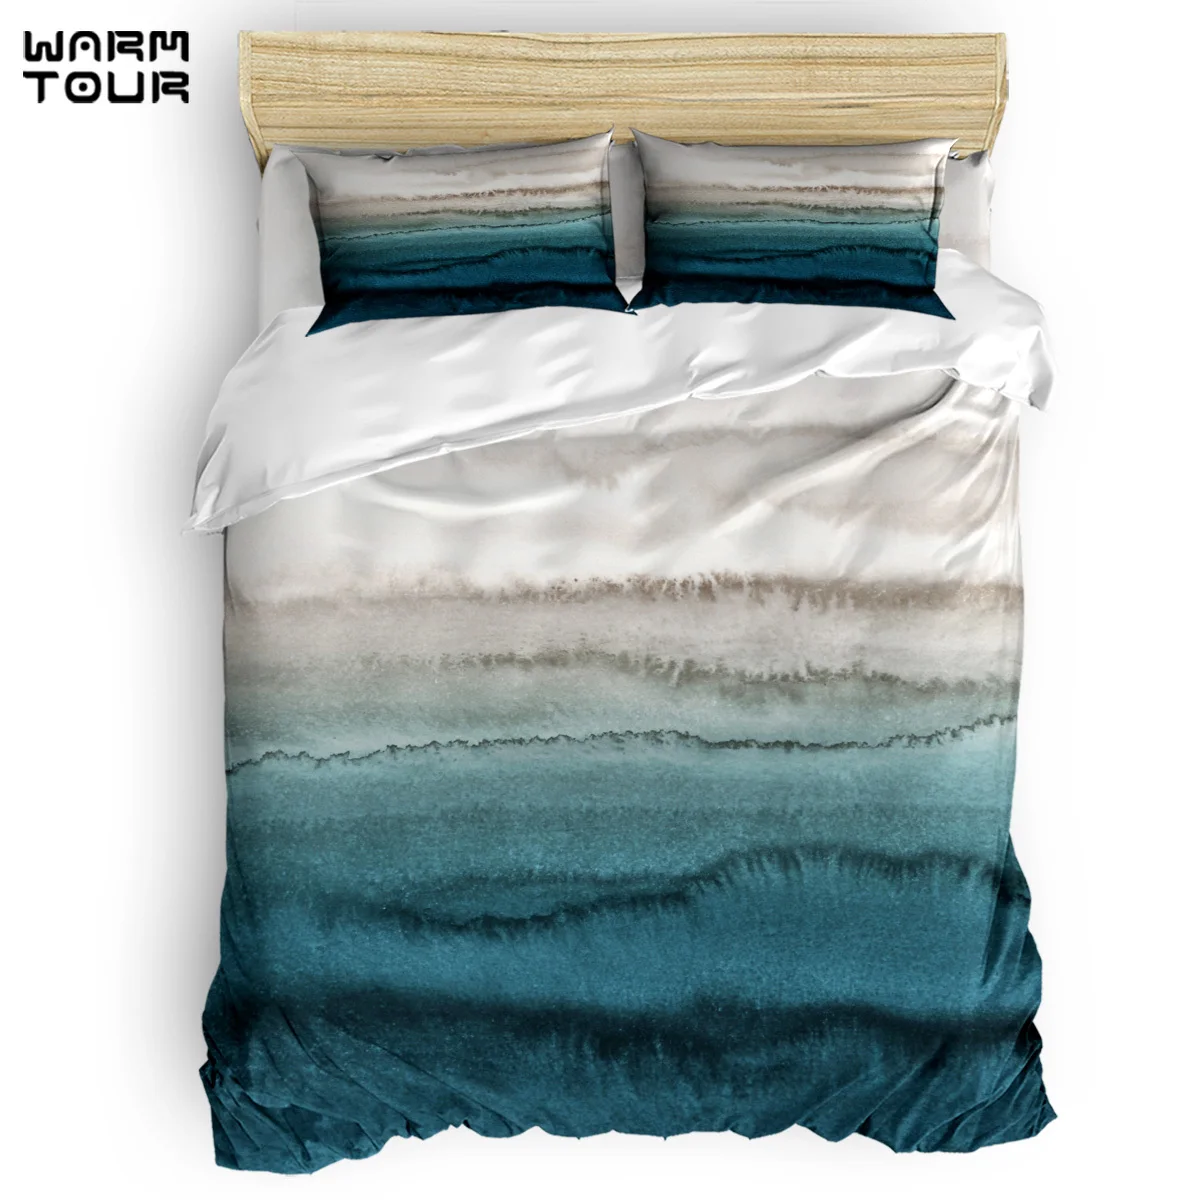 

WARMTOUR Duvet Cover WITHIN THE TIDES - CRASHING WAVES TEAL Duvet Cover Set 4 Piece Bedding Set For Beds